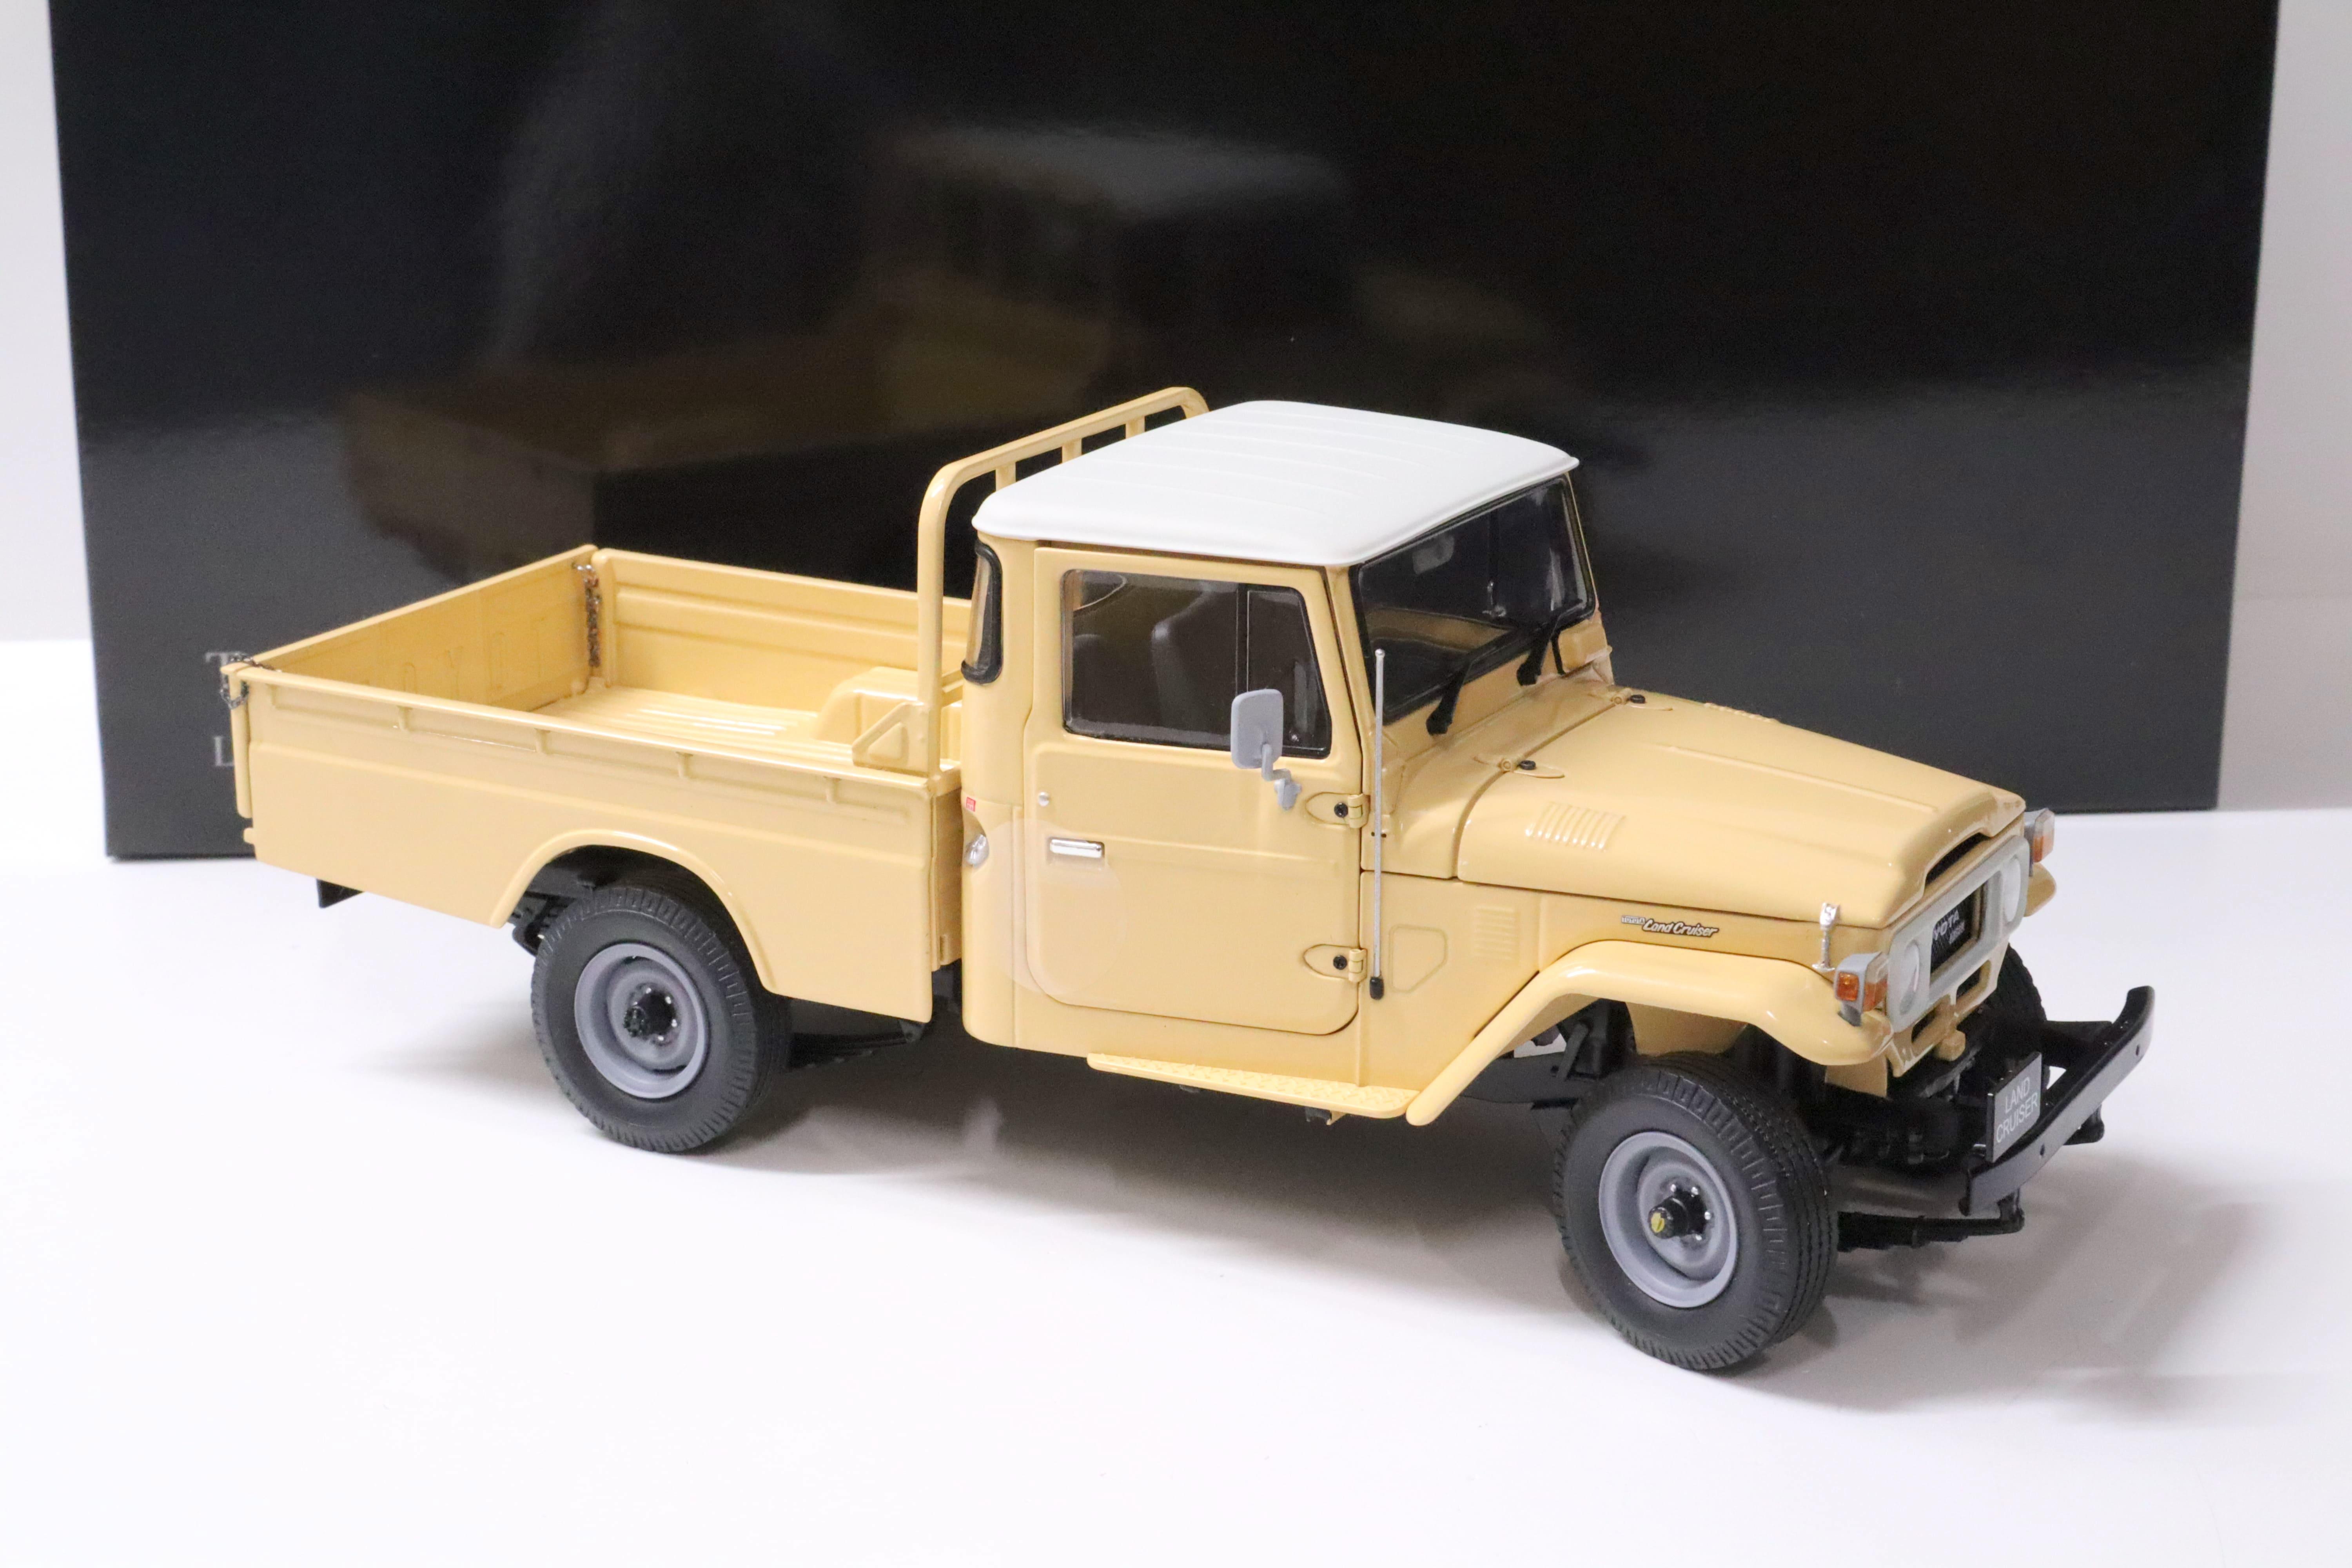 1:18 Kyosho Toyota Land Cruiser 40 Pick-Up beige 1980